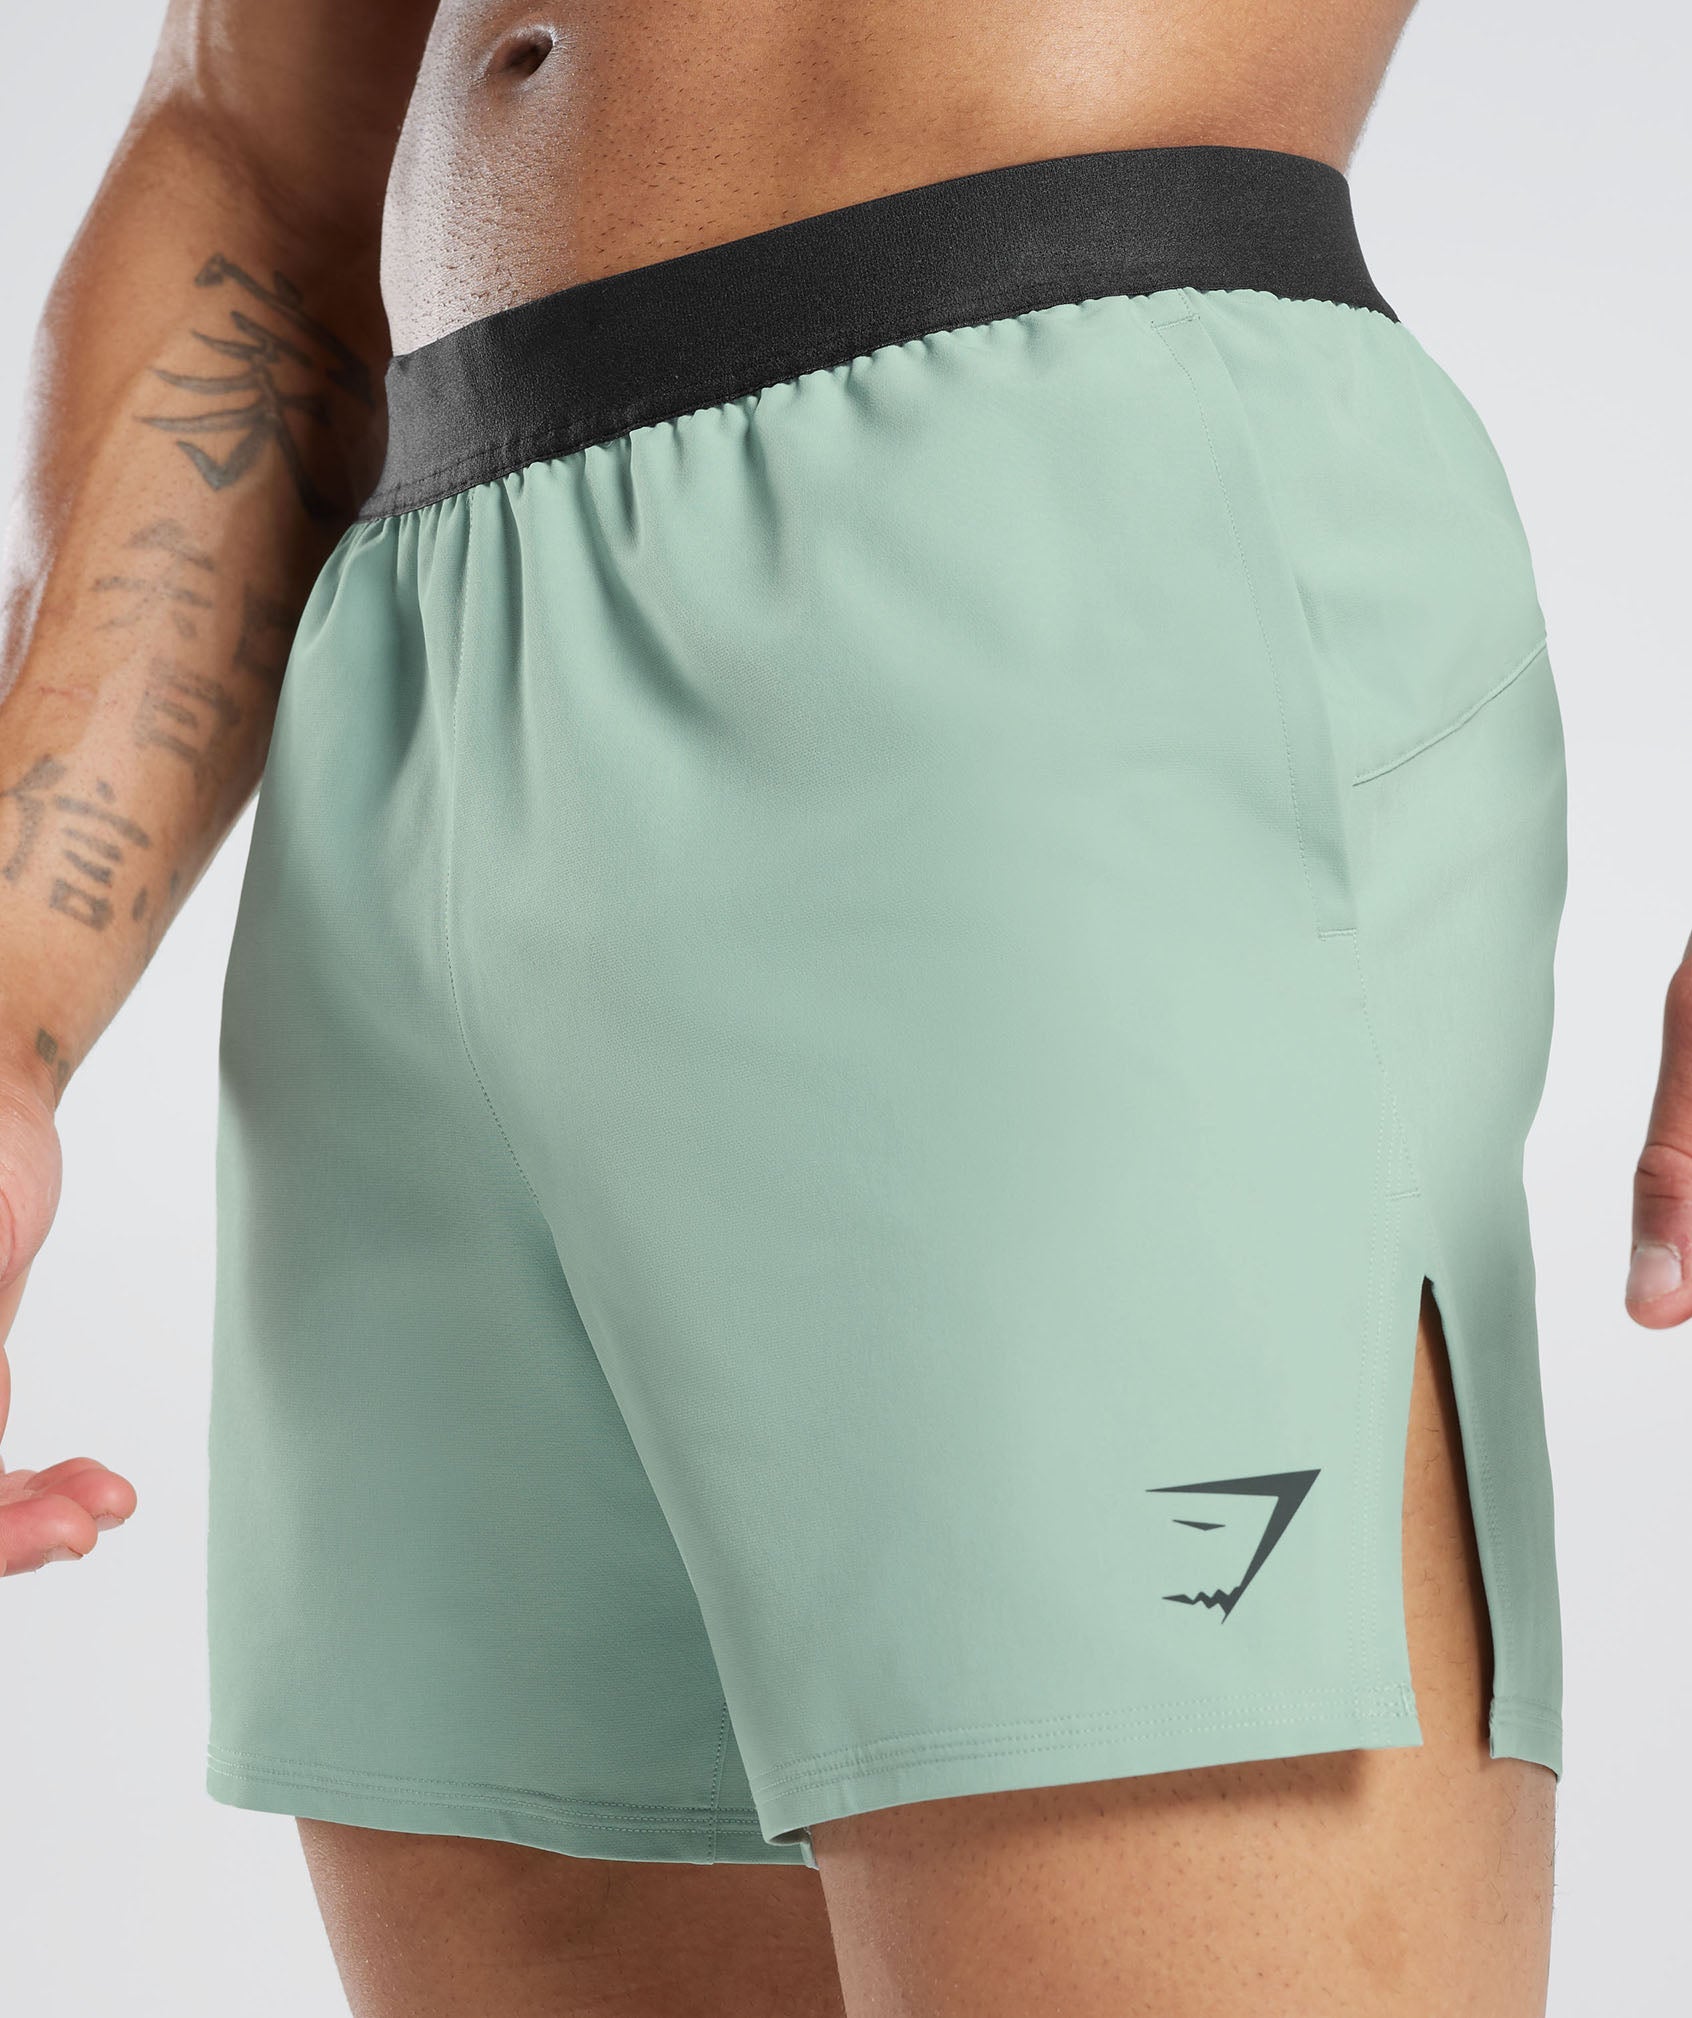 Gymshark 315 Seamless Shorts - Ink Teal/Jewel Green